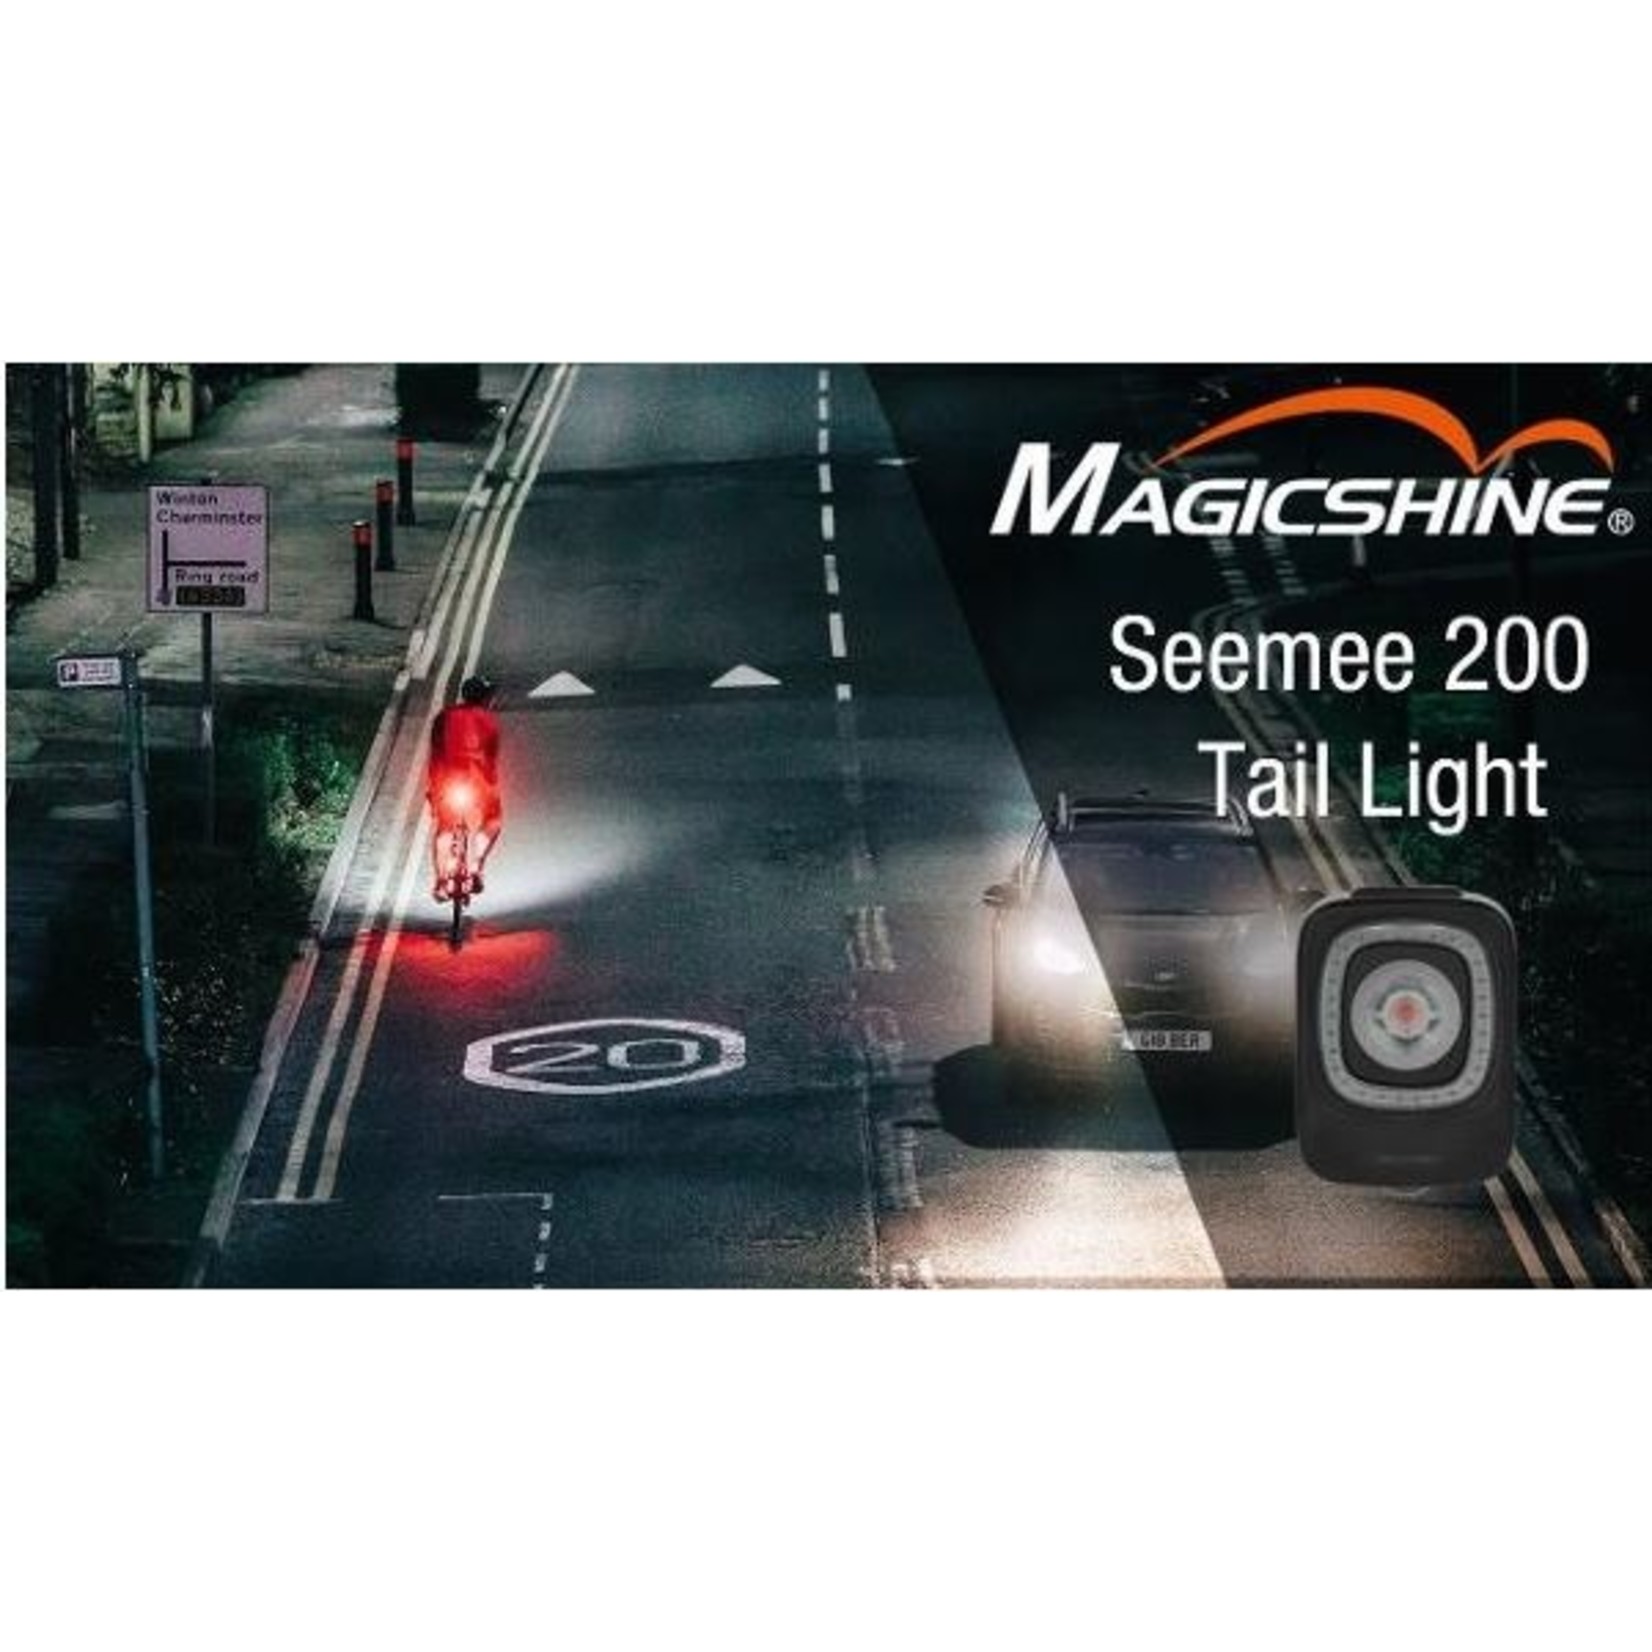 magicshine Magicshine Rear Bicycle Light USB - Seemee 200